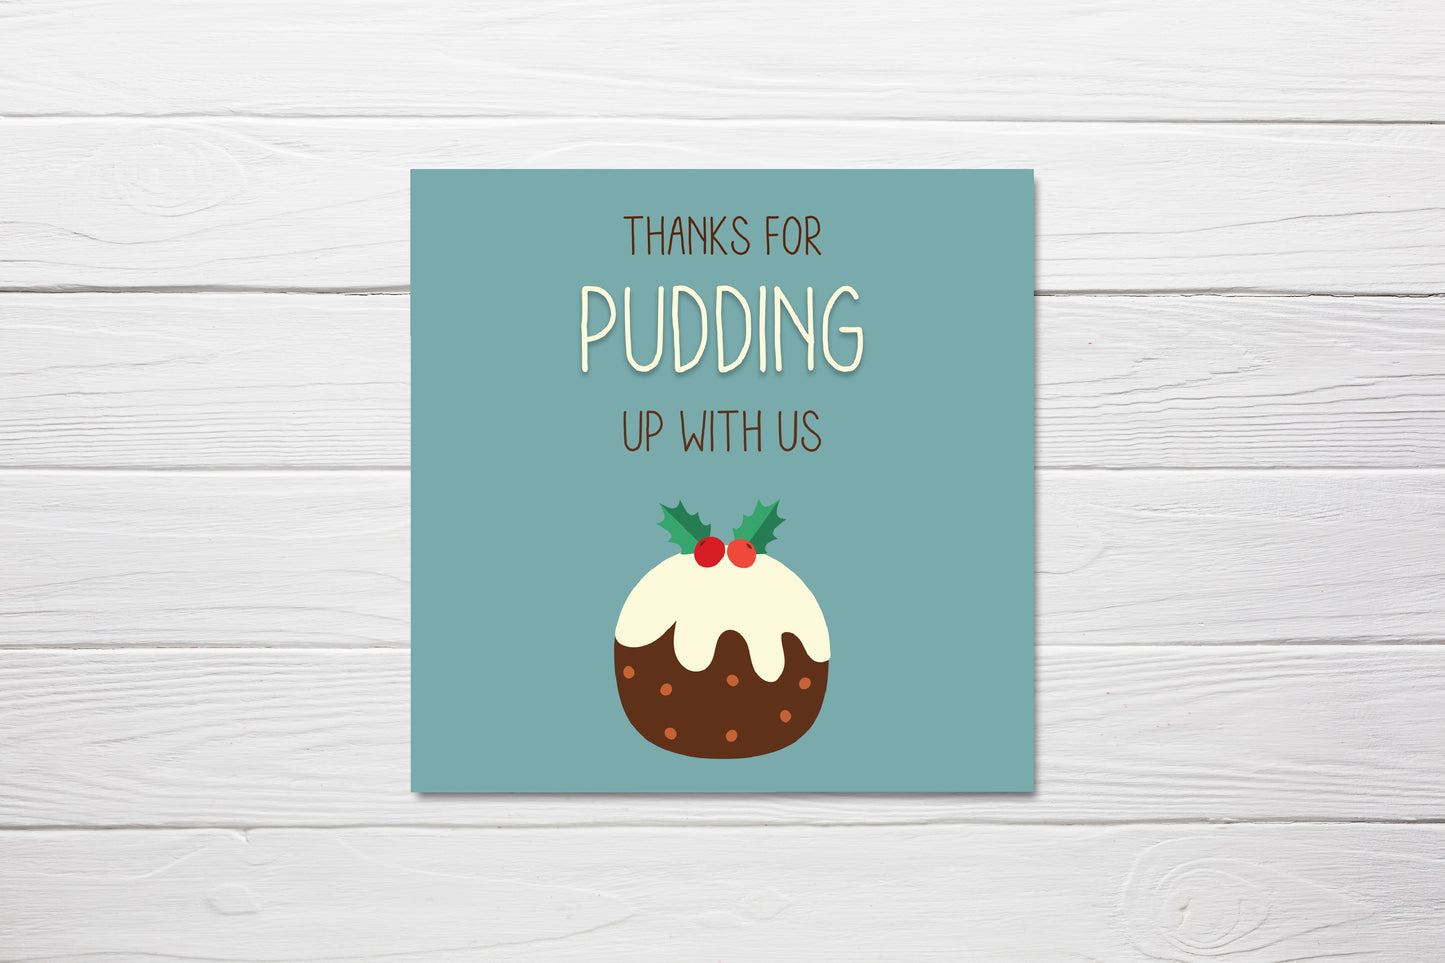 Christmas Card | Thanks for pudding up with us | Funny Teacher Christmas Card